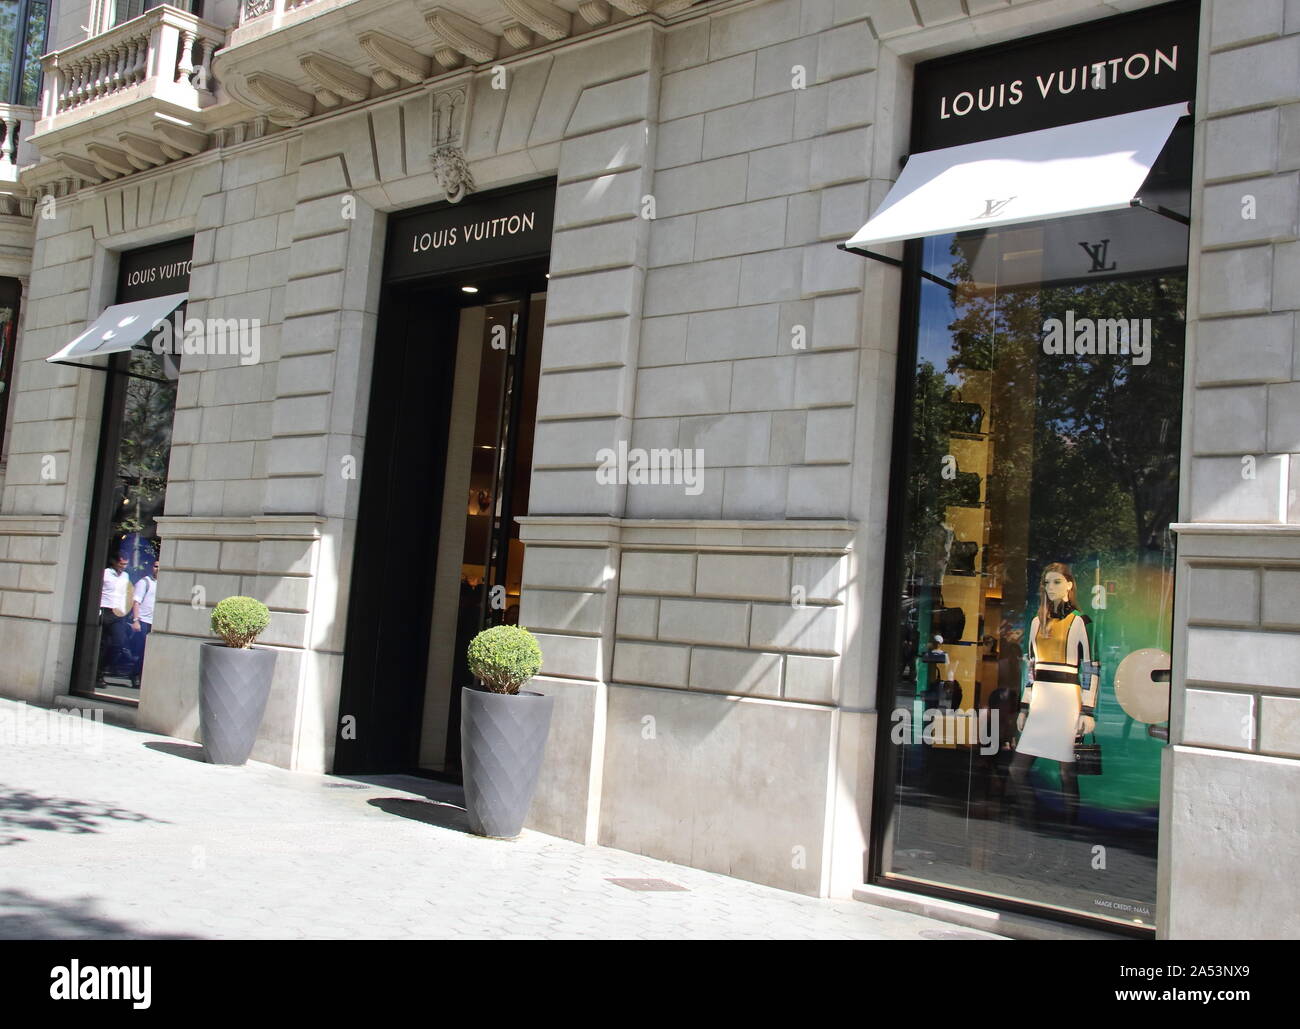 Louis Vuitton Shops in Barcelona, Catalunya Spain